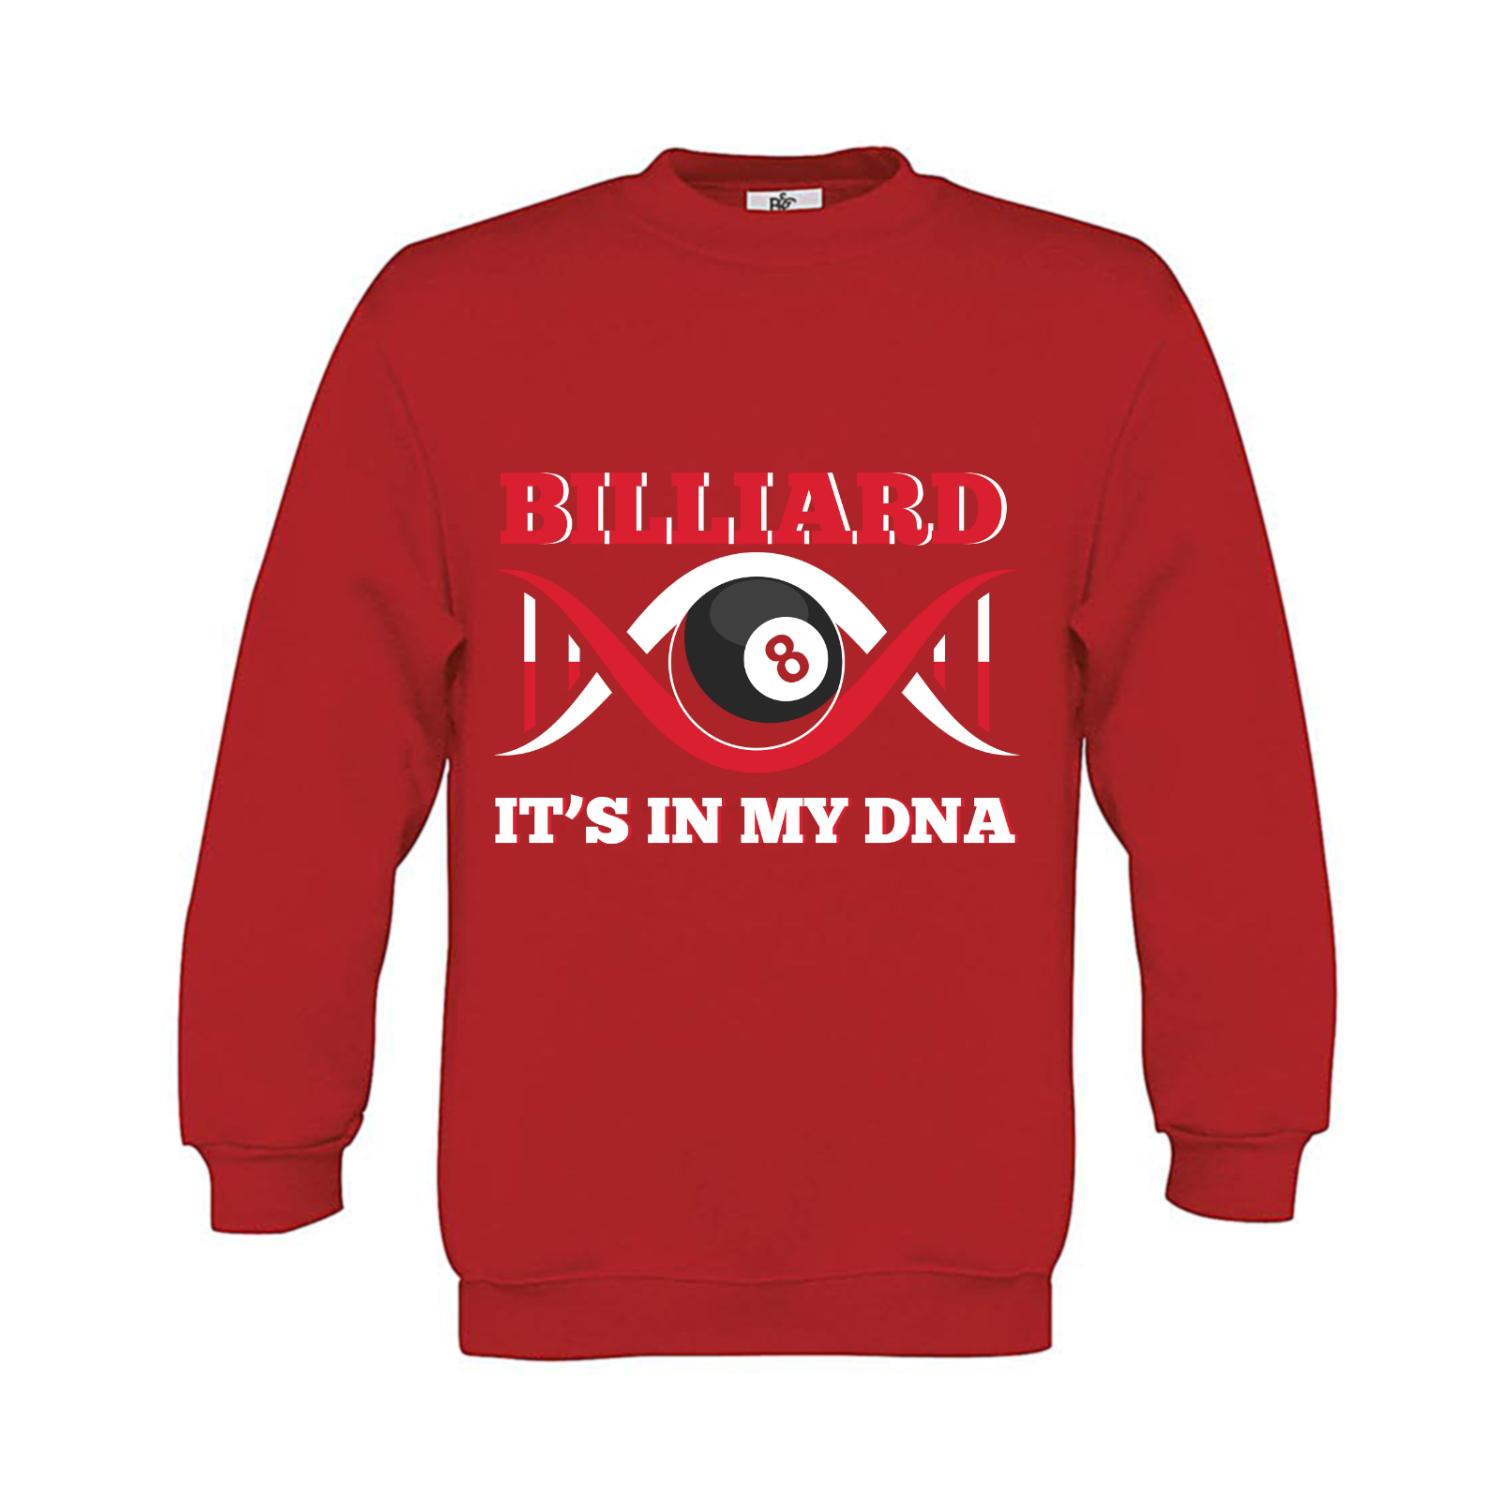 Sweatshirt Kinder Billard is in my DNA